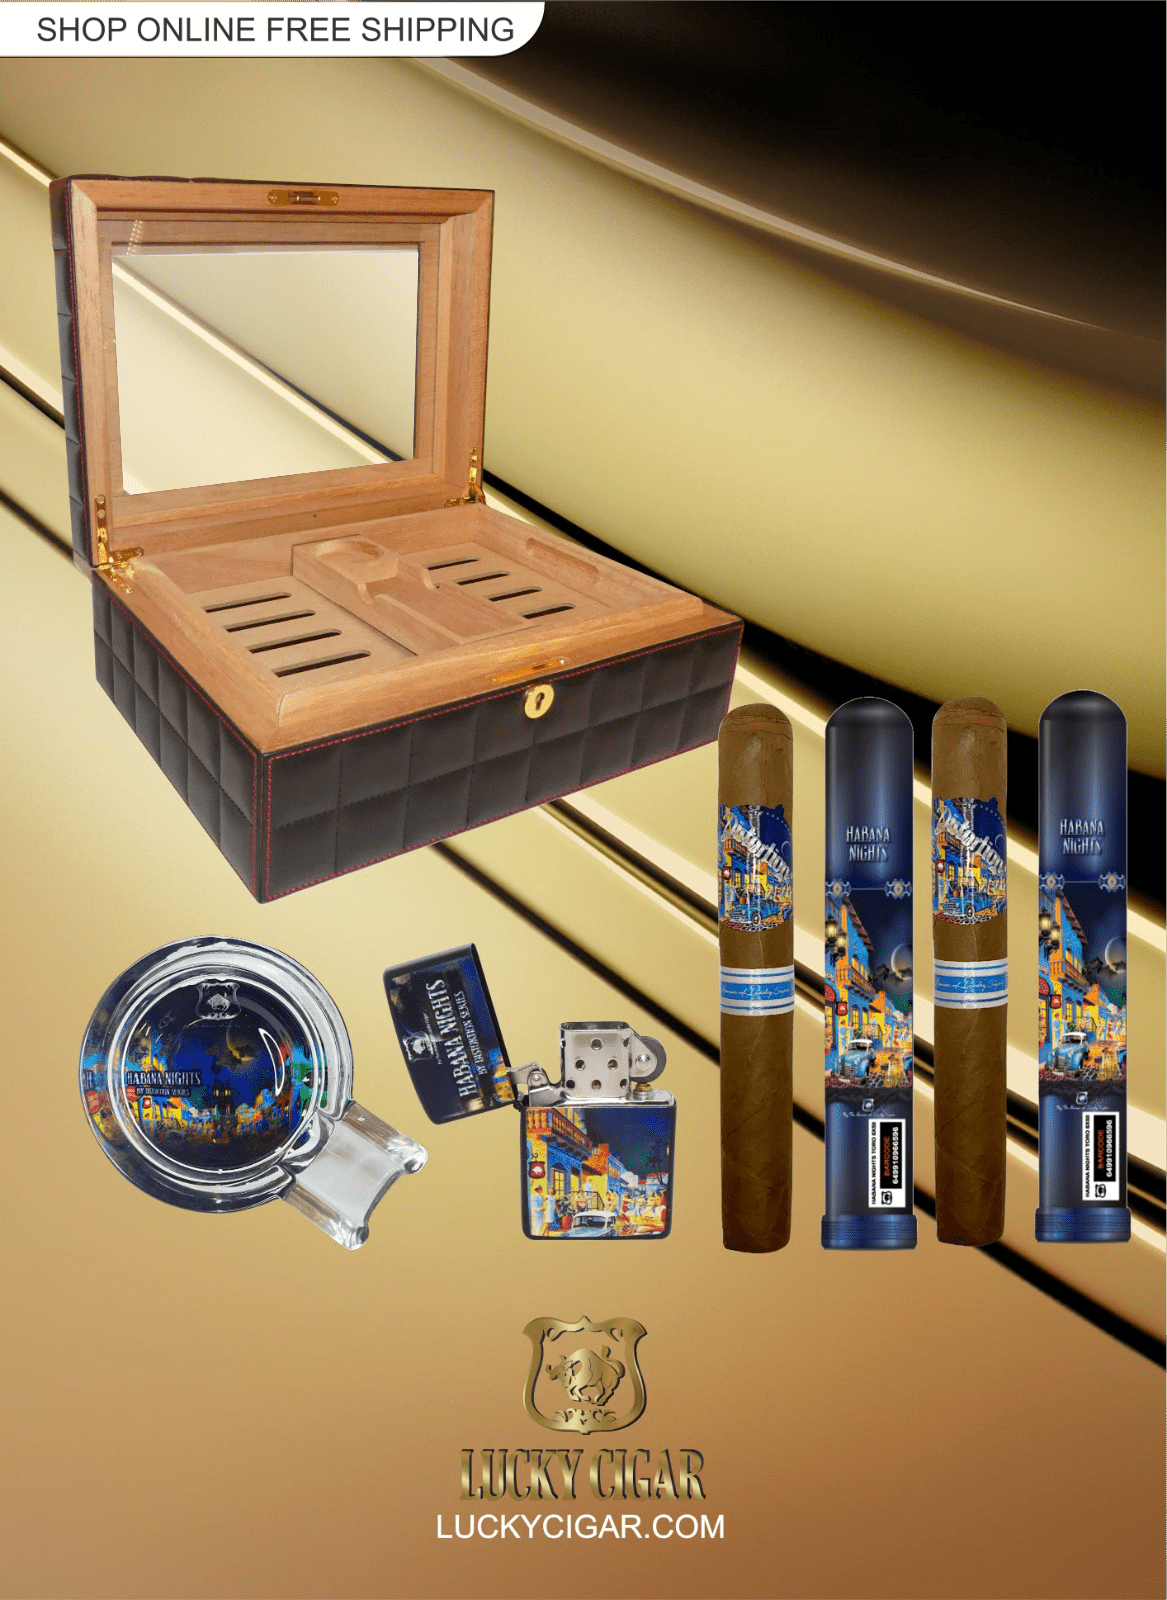 Lucky Cigar Sampler Sets: Set of 2 Habana Nights Cigars with Ashtray, Lighter